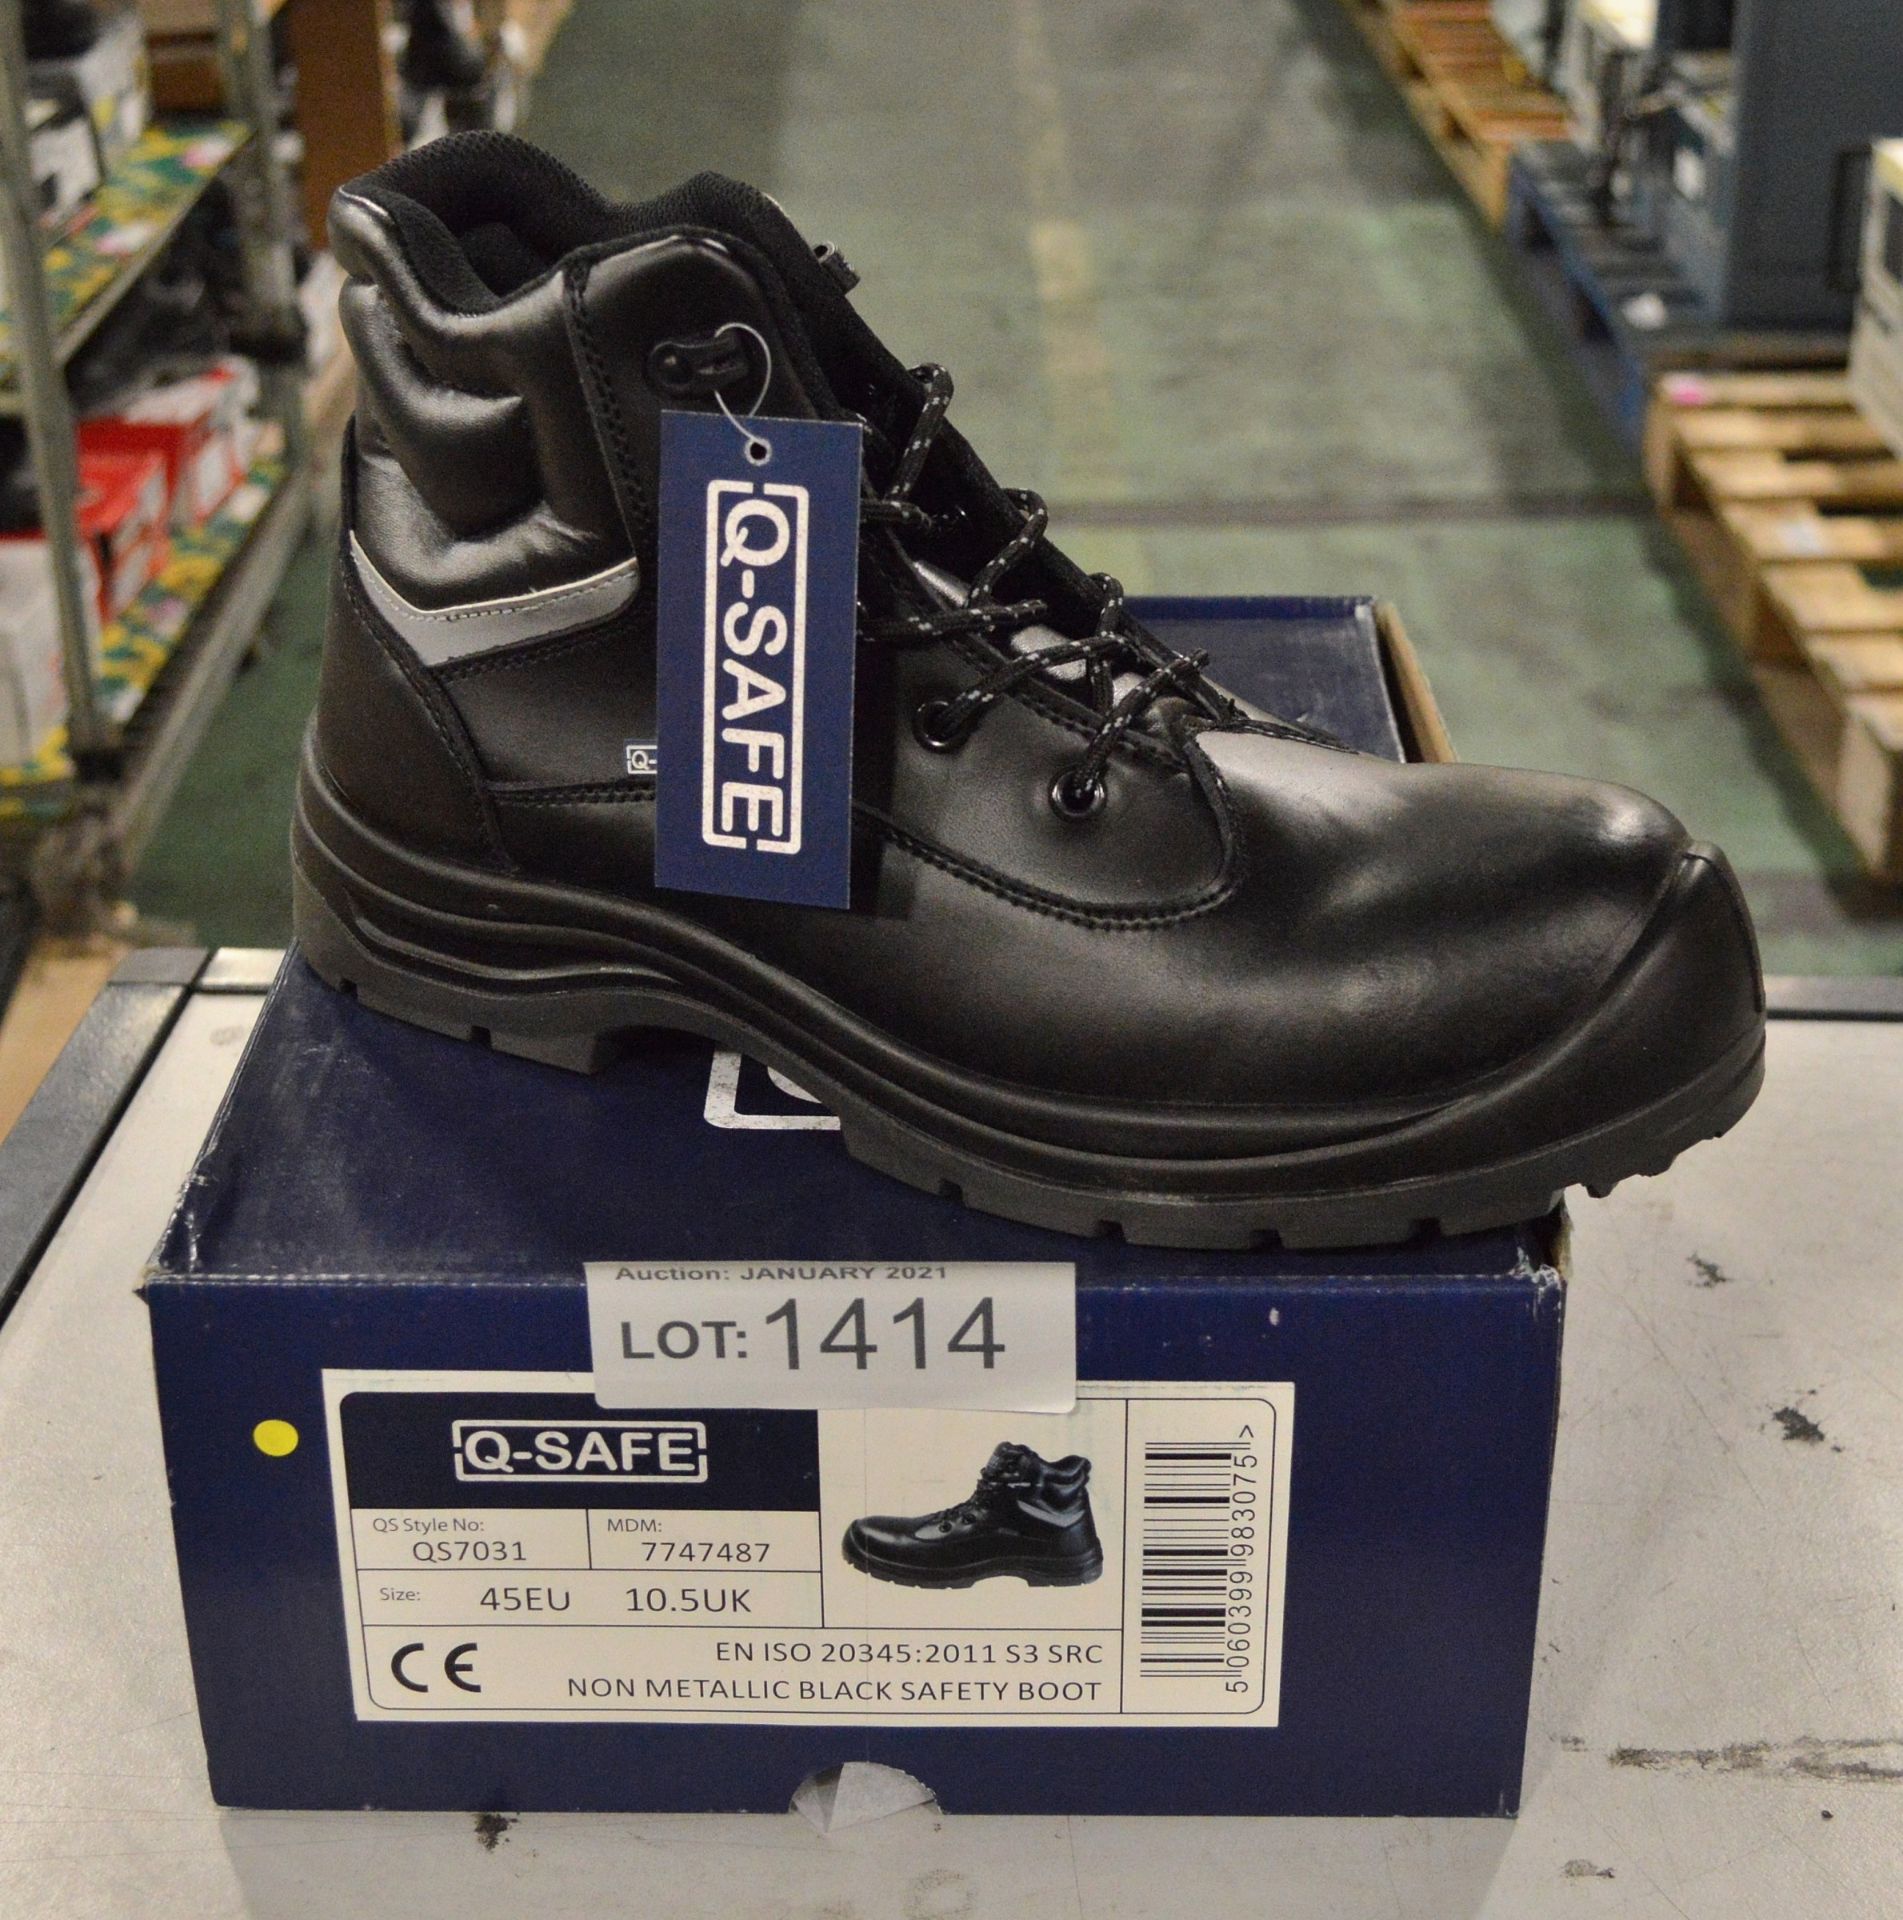 Safety boots - Q-safe non metallic safety boot QS7031 - 10.5UK 45EU